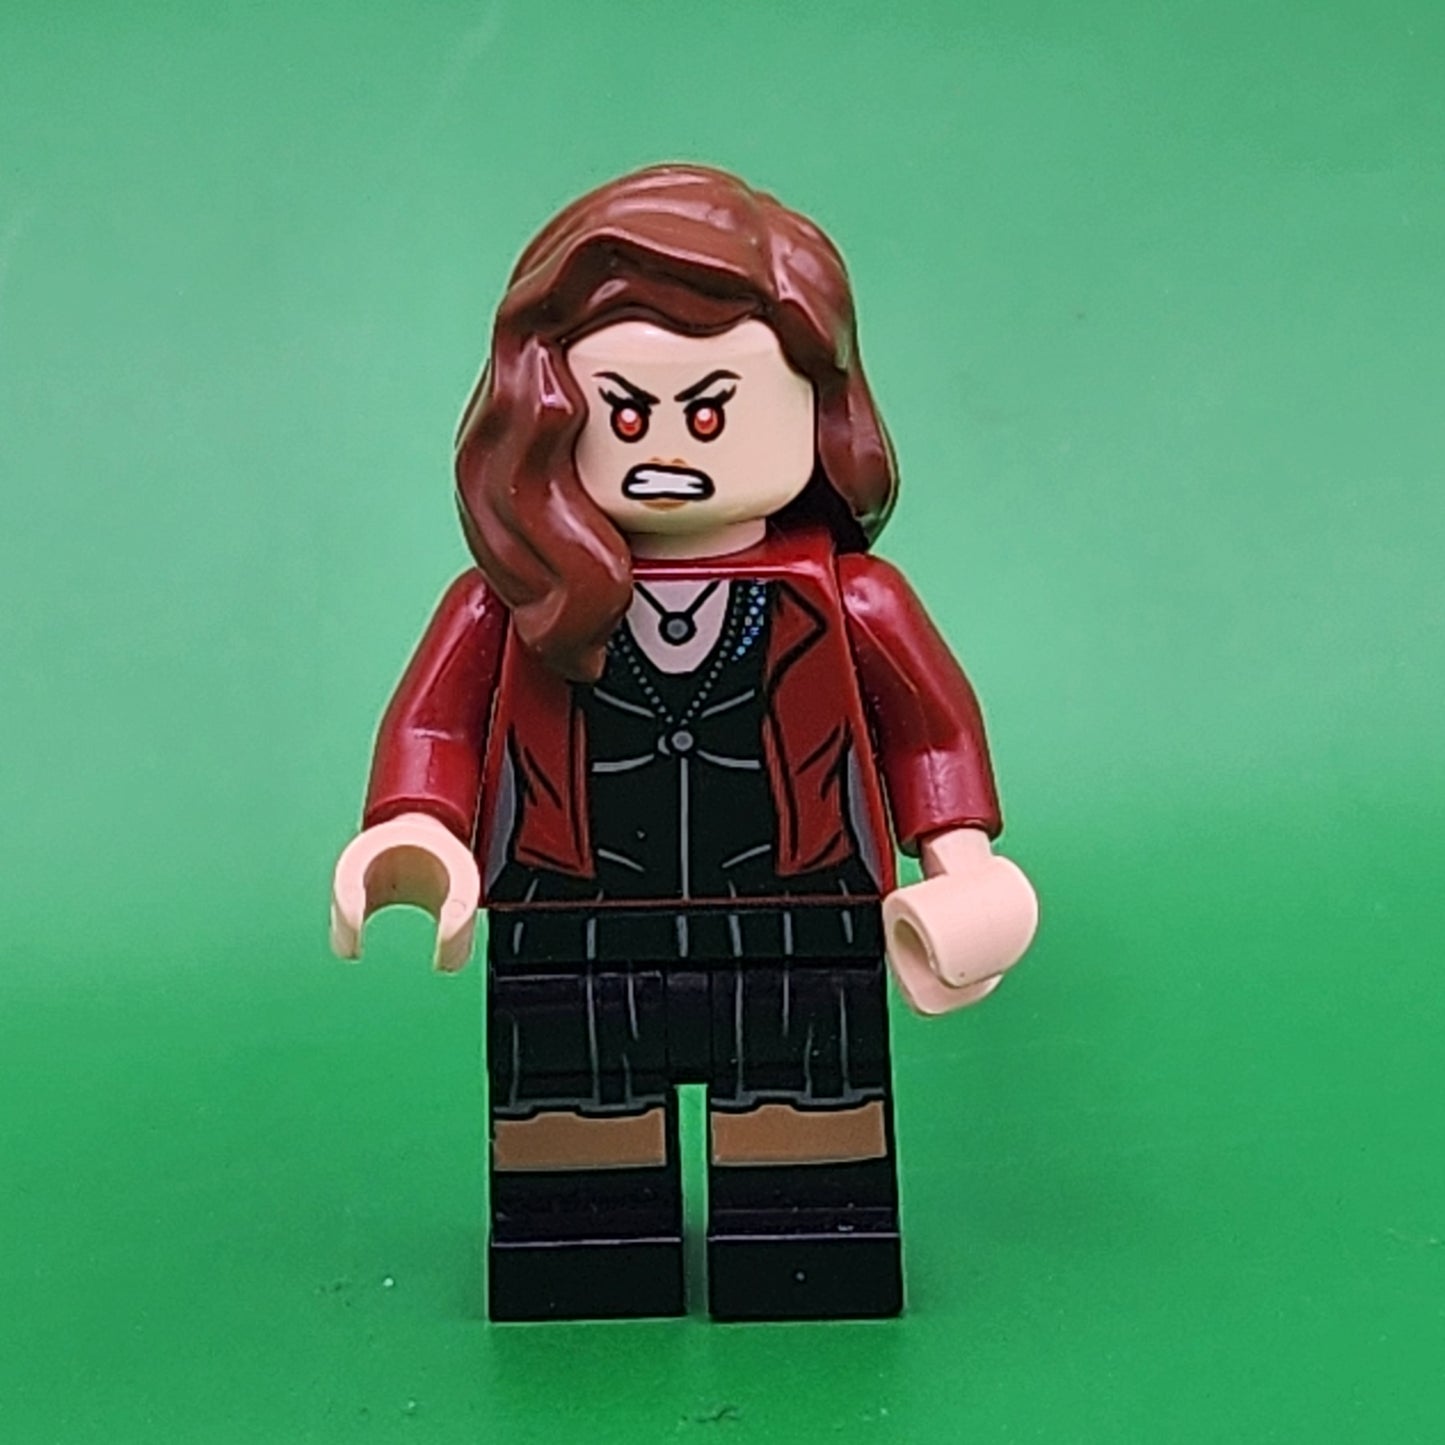 Lego The Scarlet Witch (Wanda Maximoff) Minifigure sh174 Avengers Age of Ultron